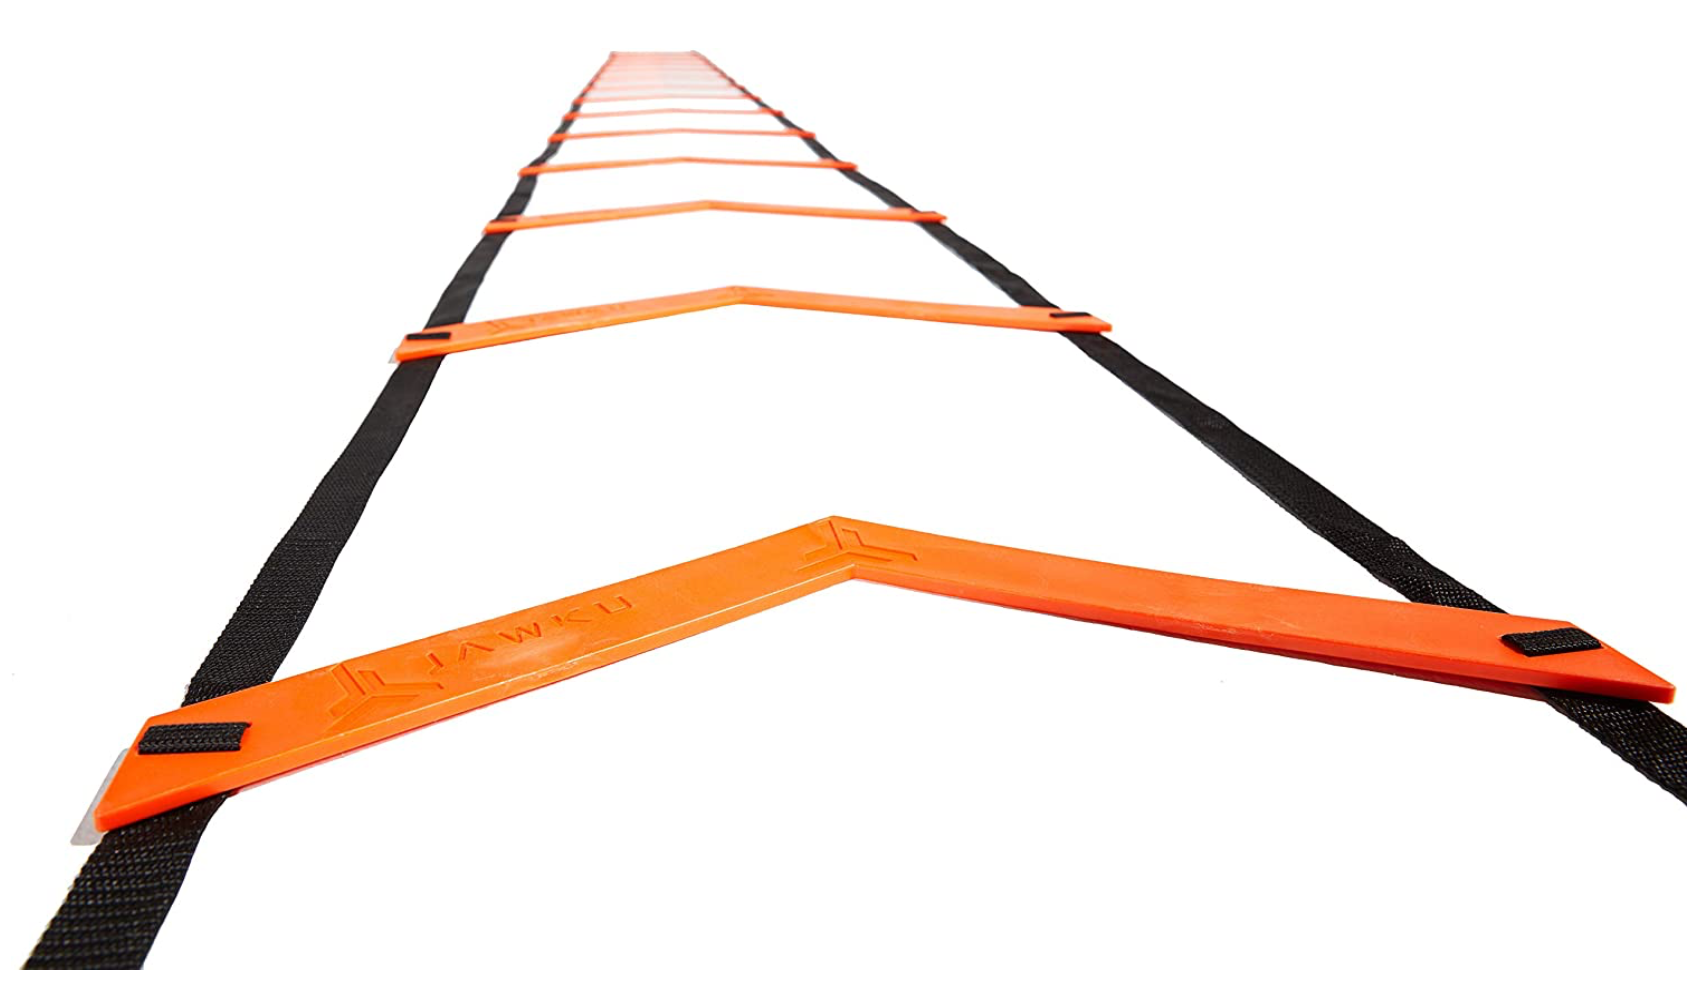 Scala Veloce Speedladder metri 4 agility ladder